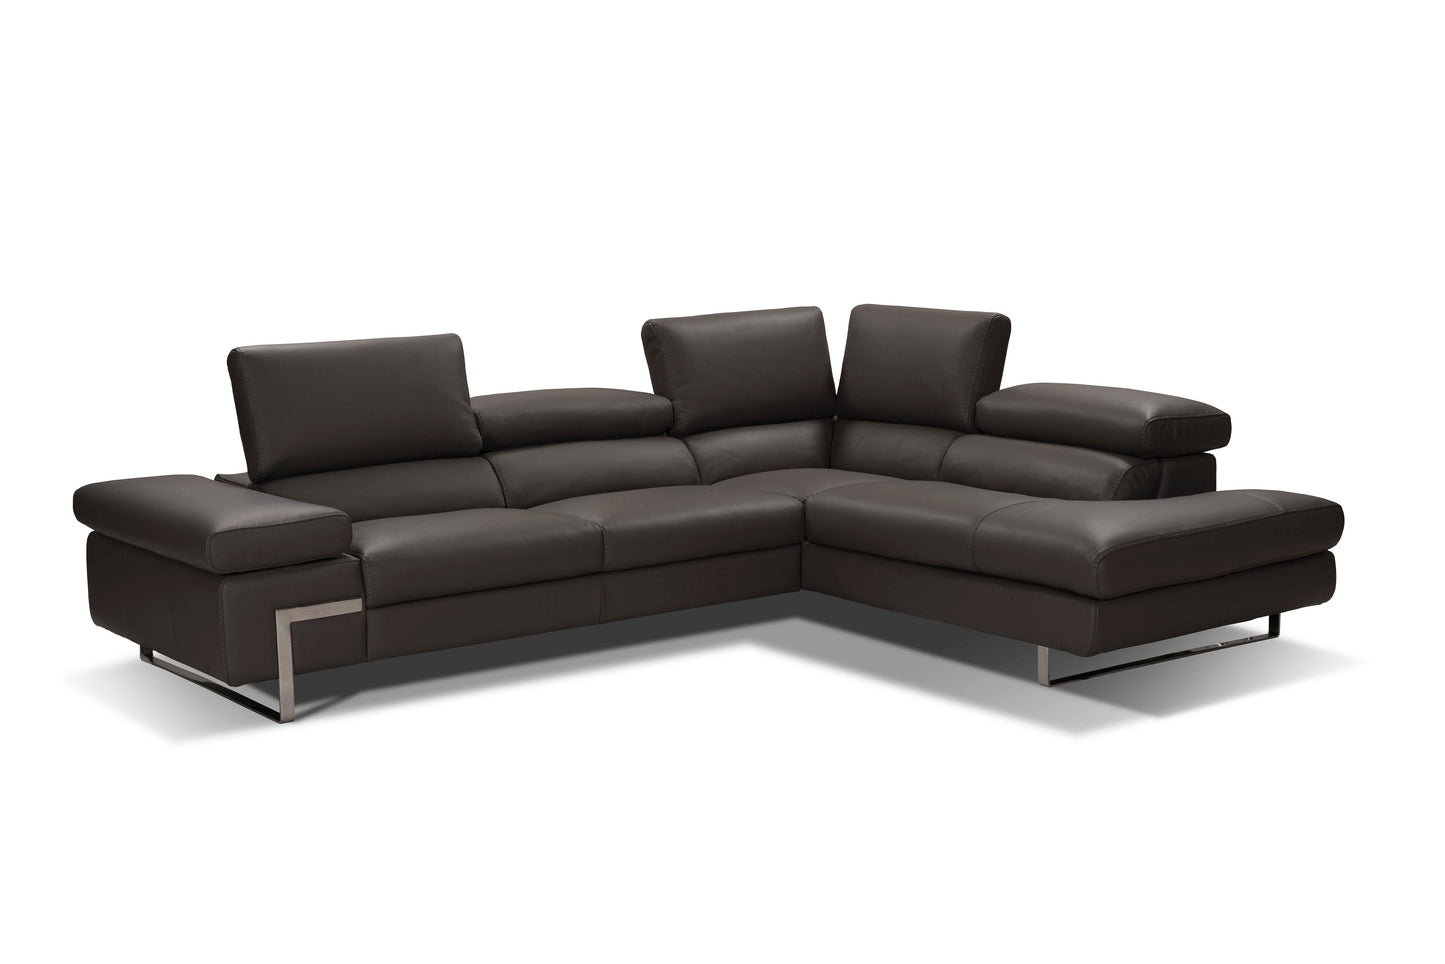 Atelier Italiana I716 Gray Sectional Sofa Right Facing Chaise by Incanto